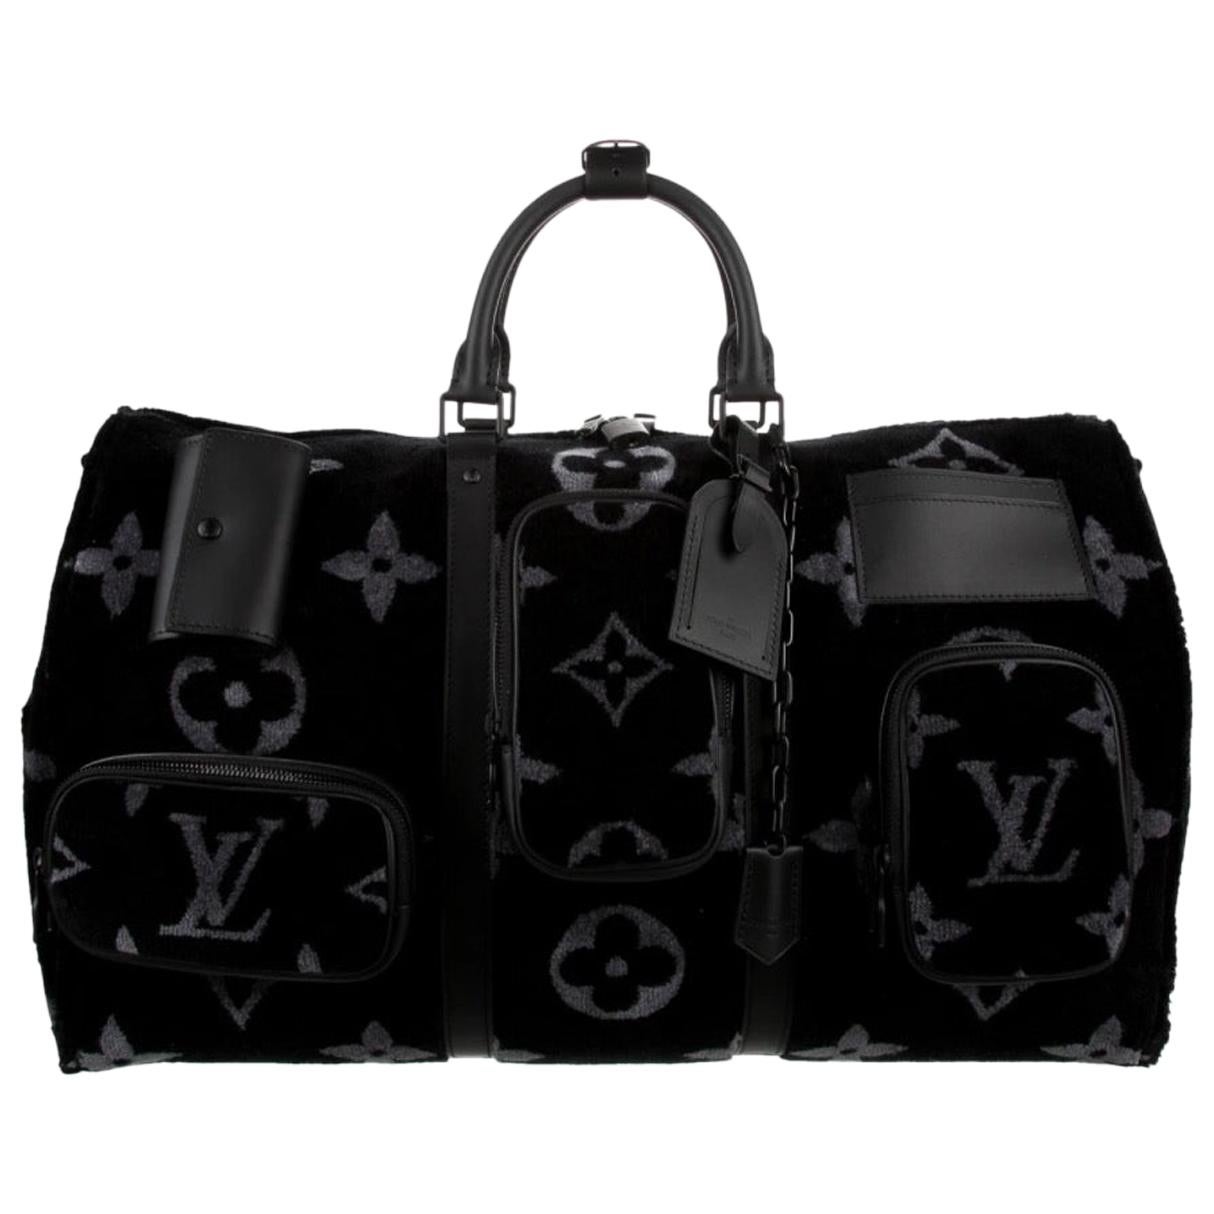 LV weekender bag - clothing & accessories - by owner - apparel sale -  craigslist